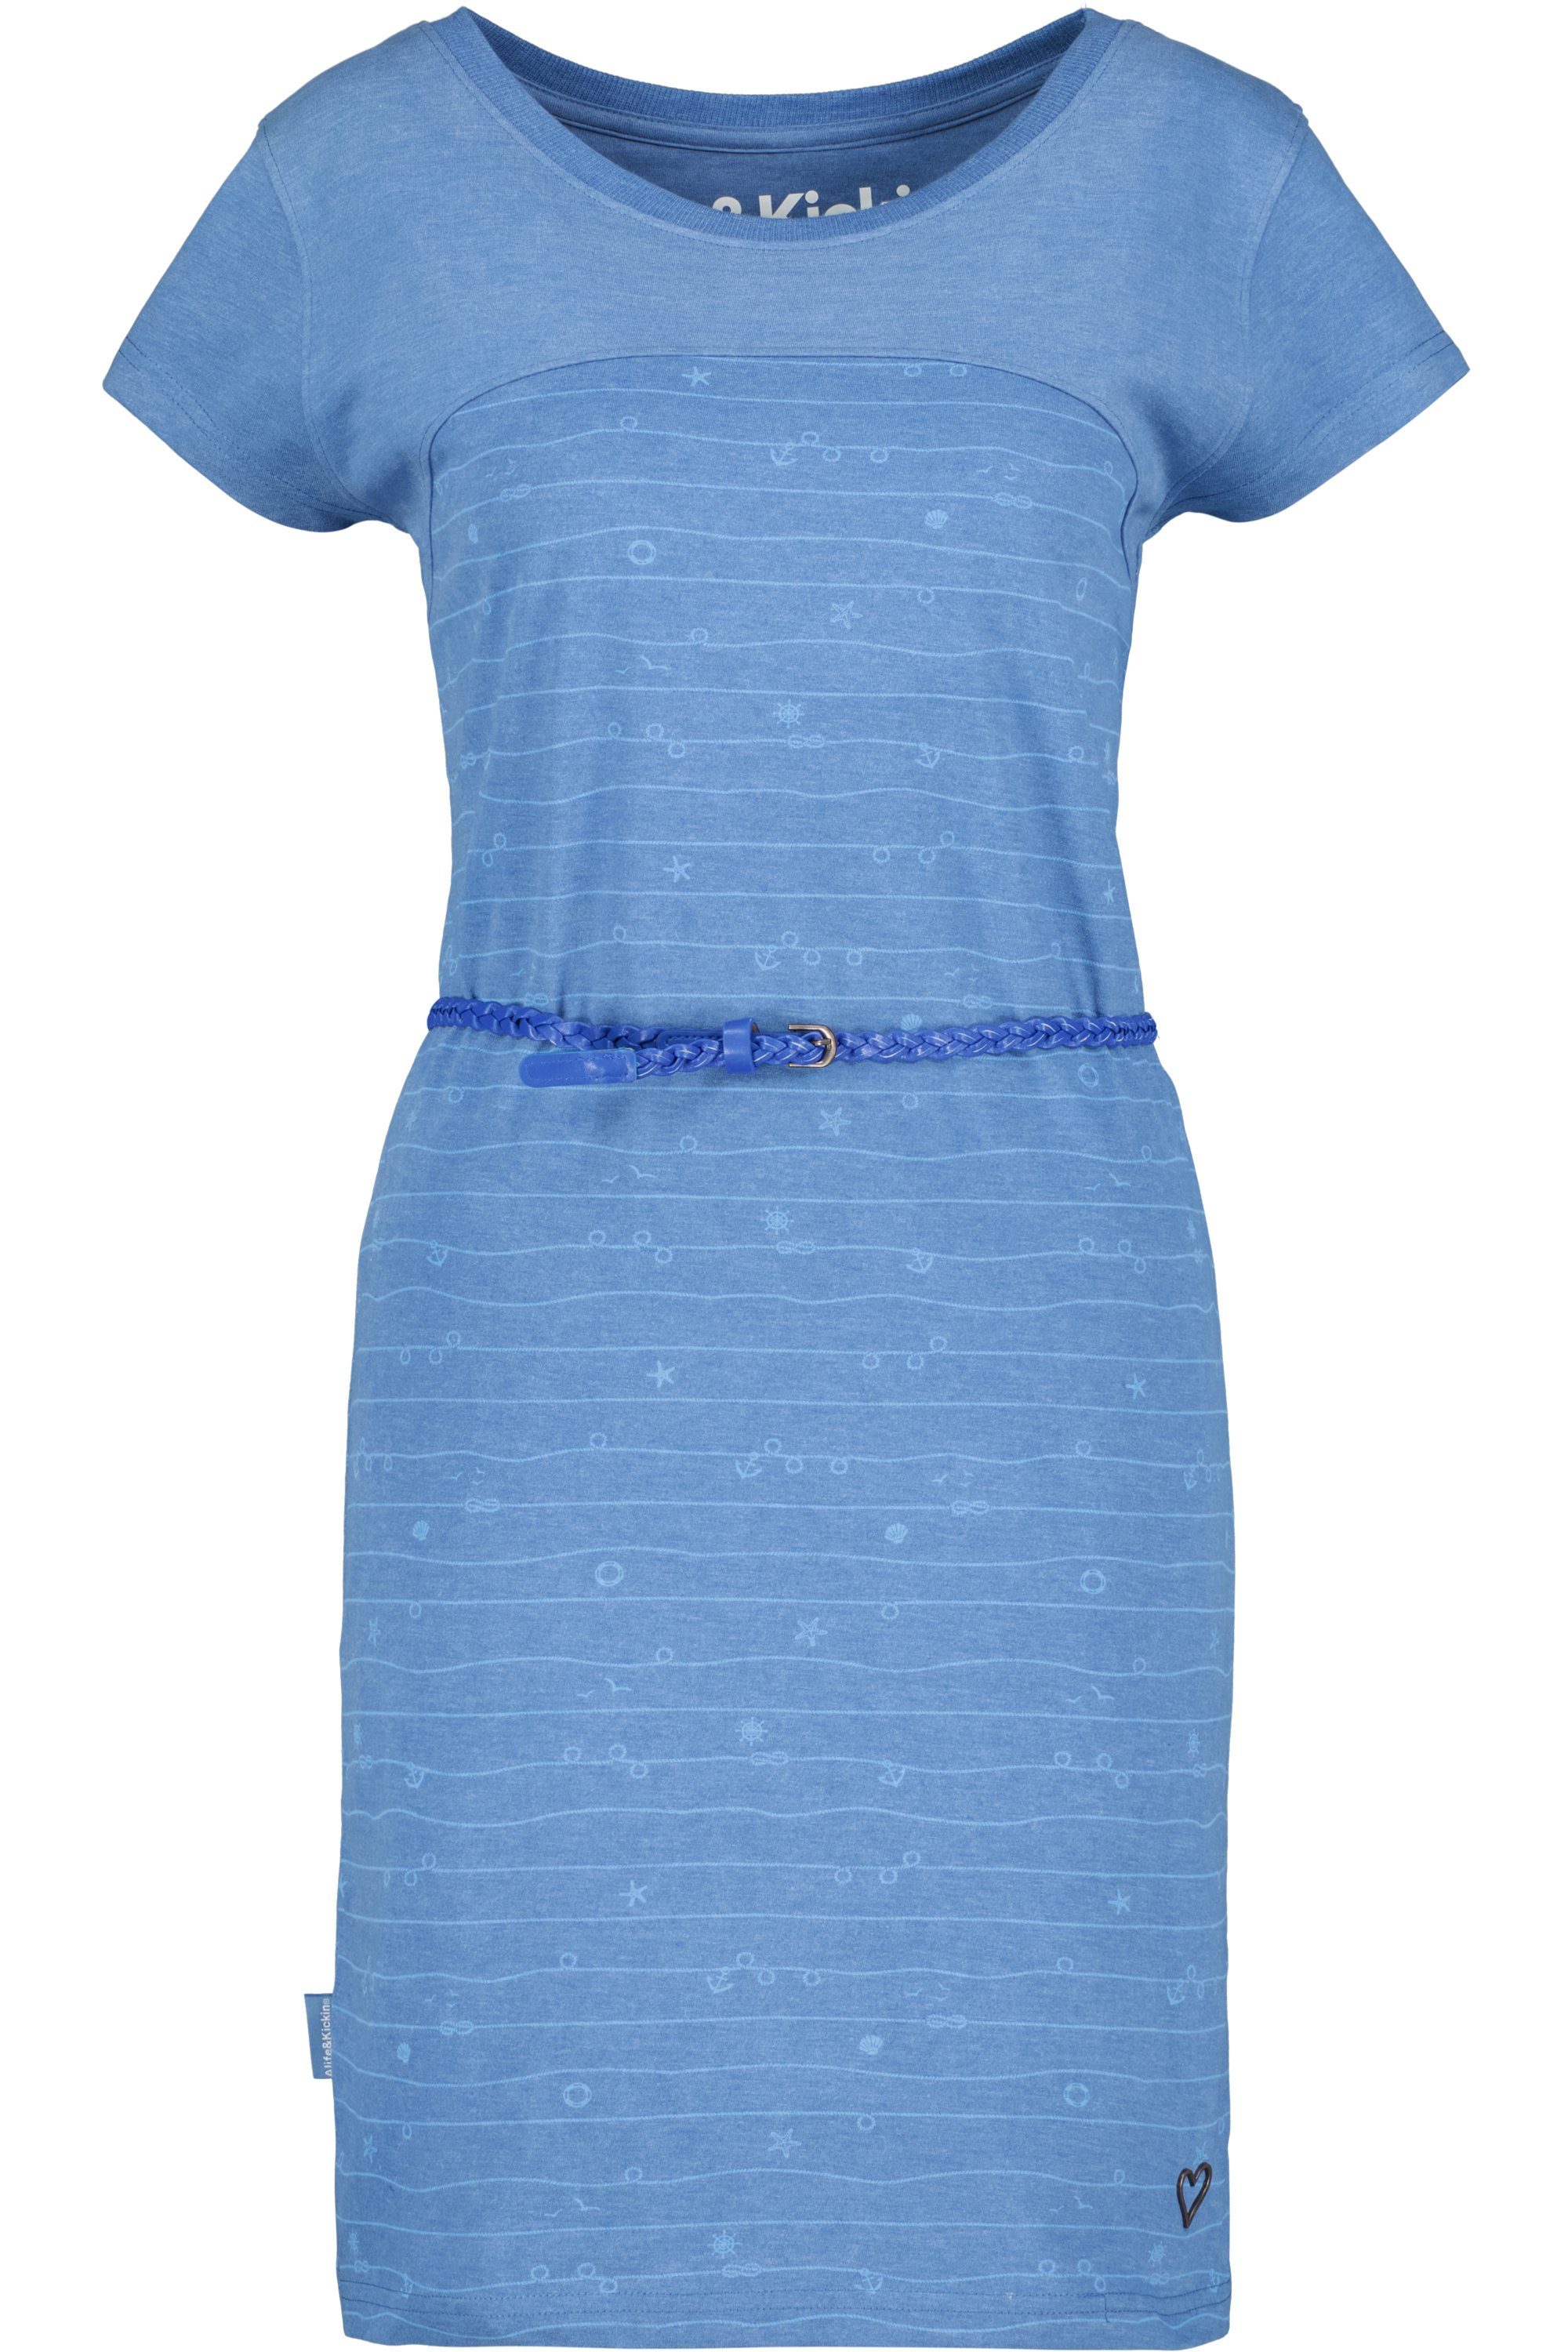 Damen cobalt Kleid Kickin ClariceAK & Blusenkleid Sommerkleid, Alife Dress